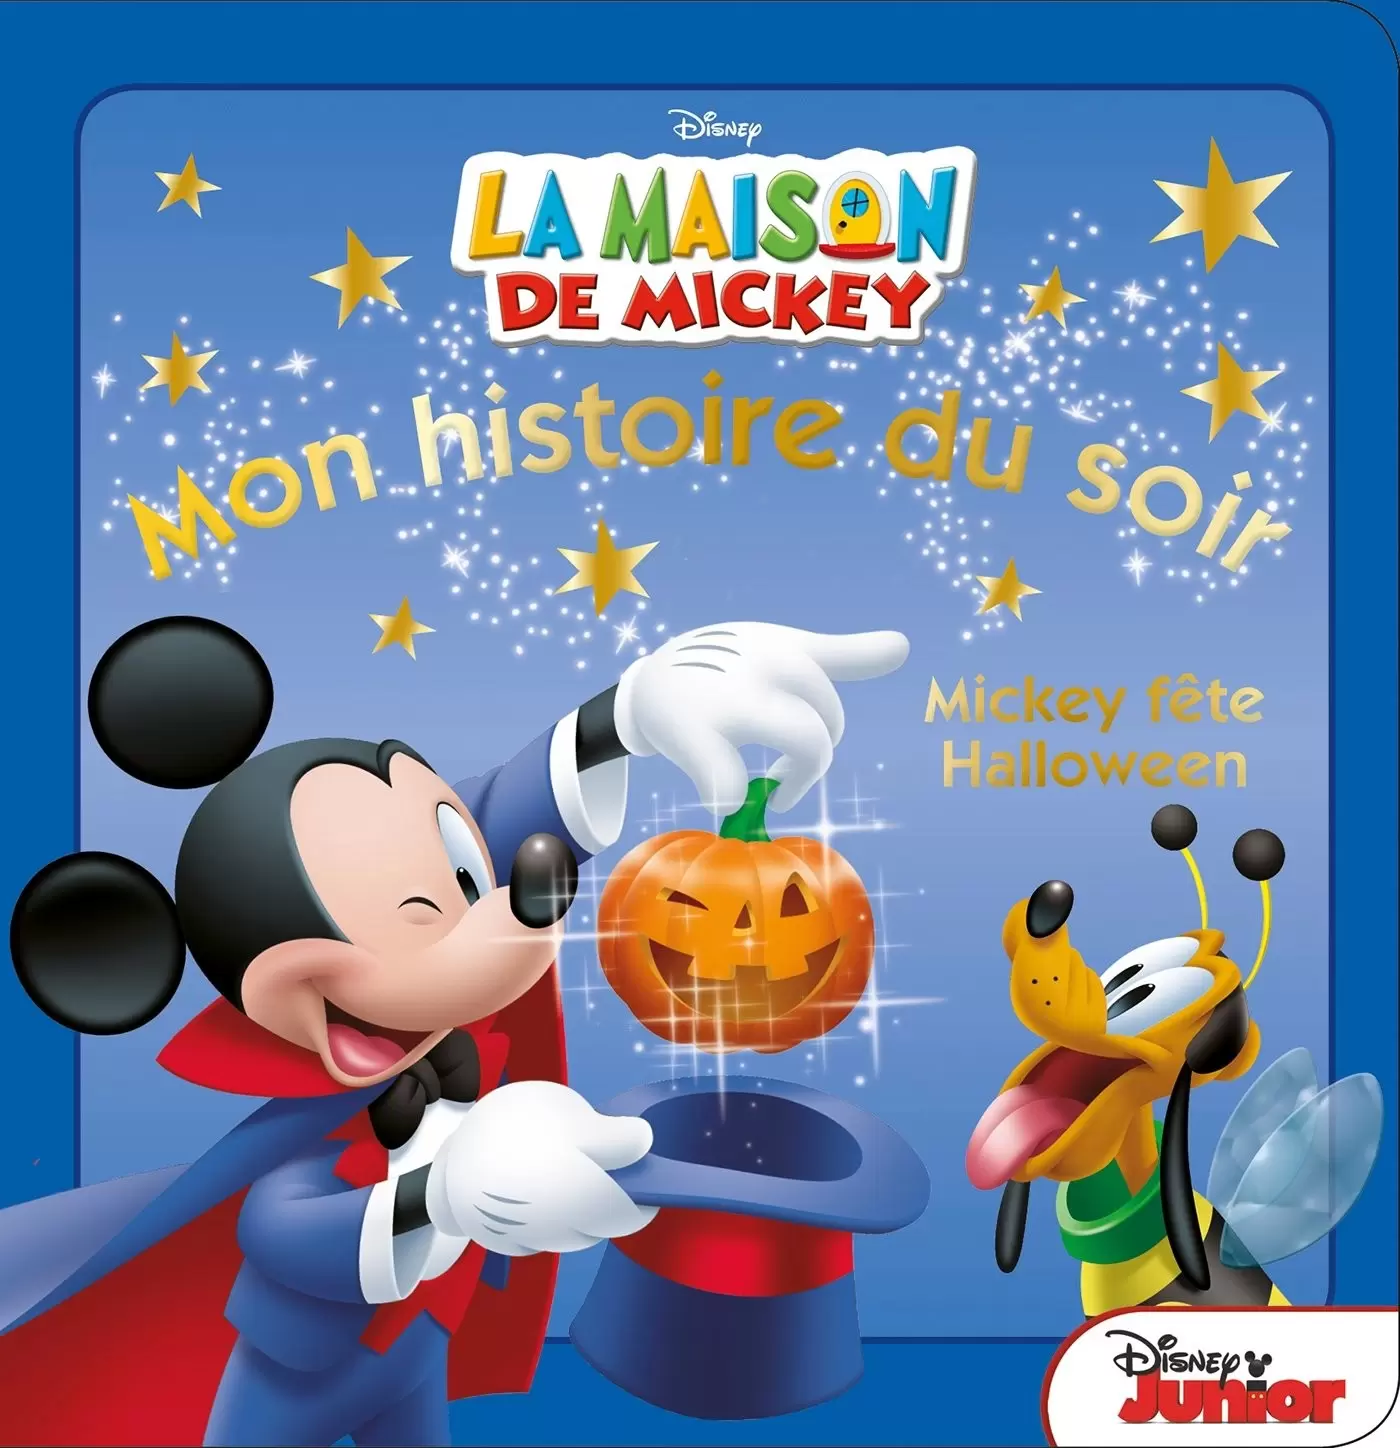 Mon histoire du soir - La maison de Mickey - Mickey fête Halloween